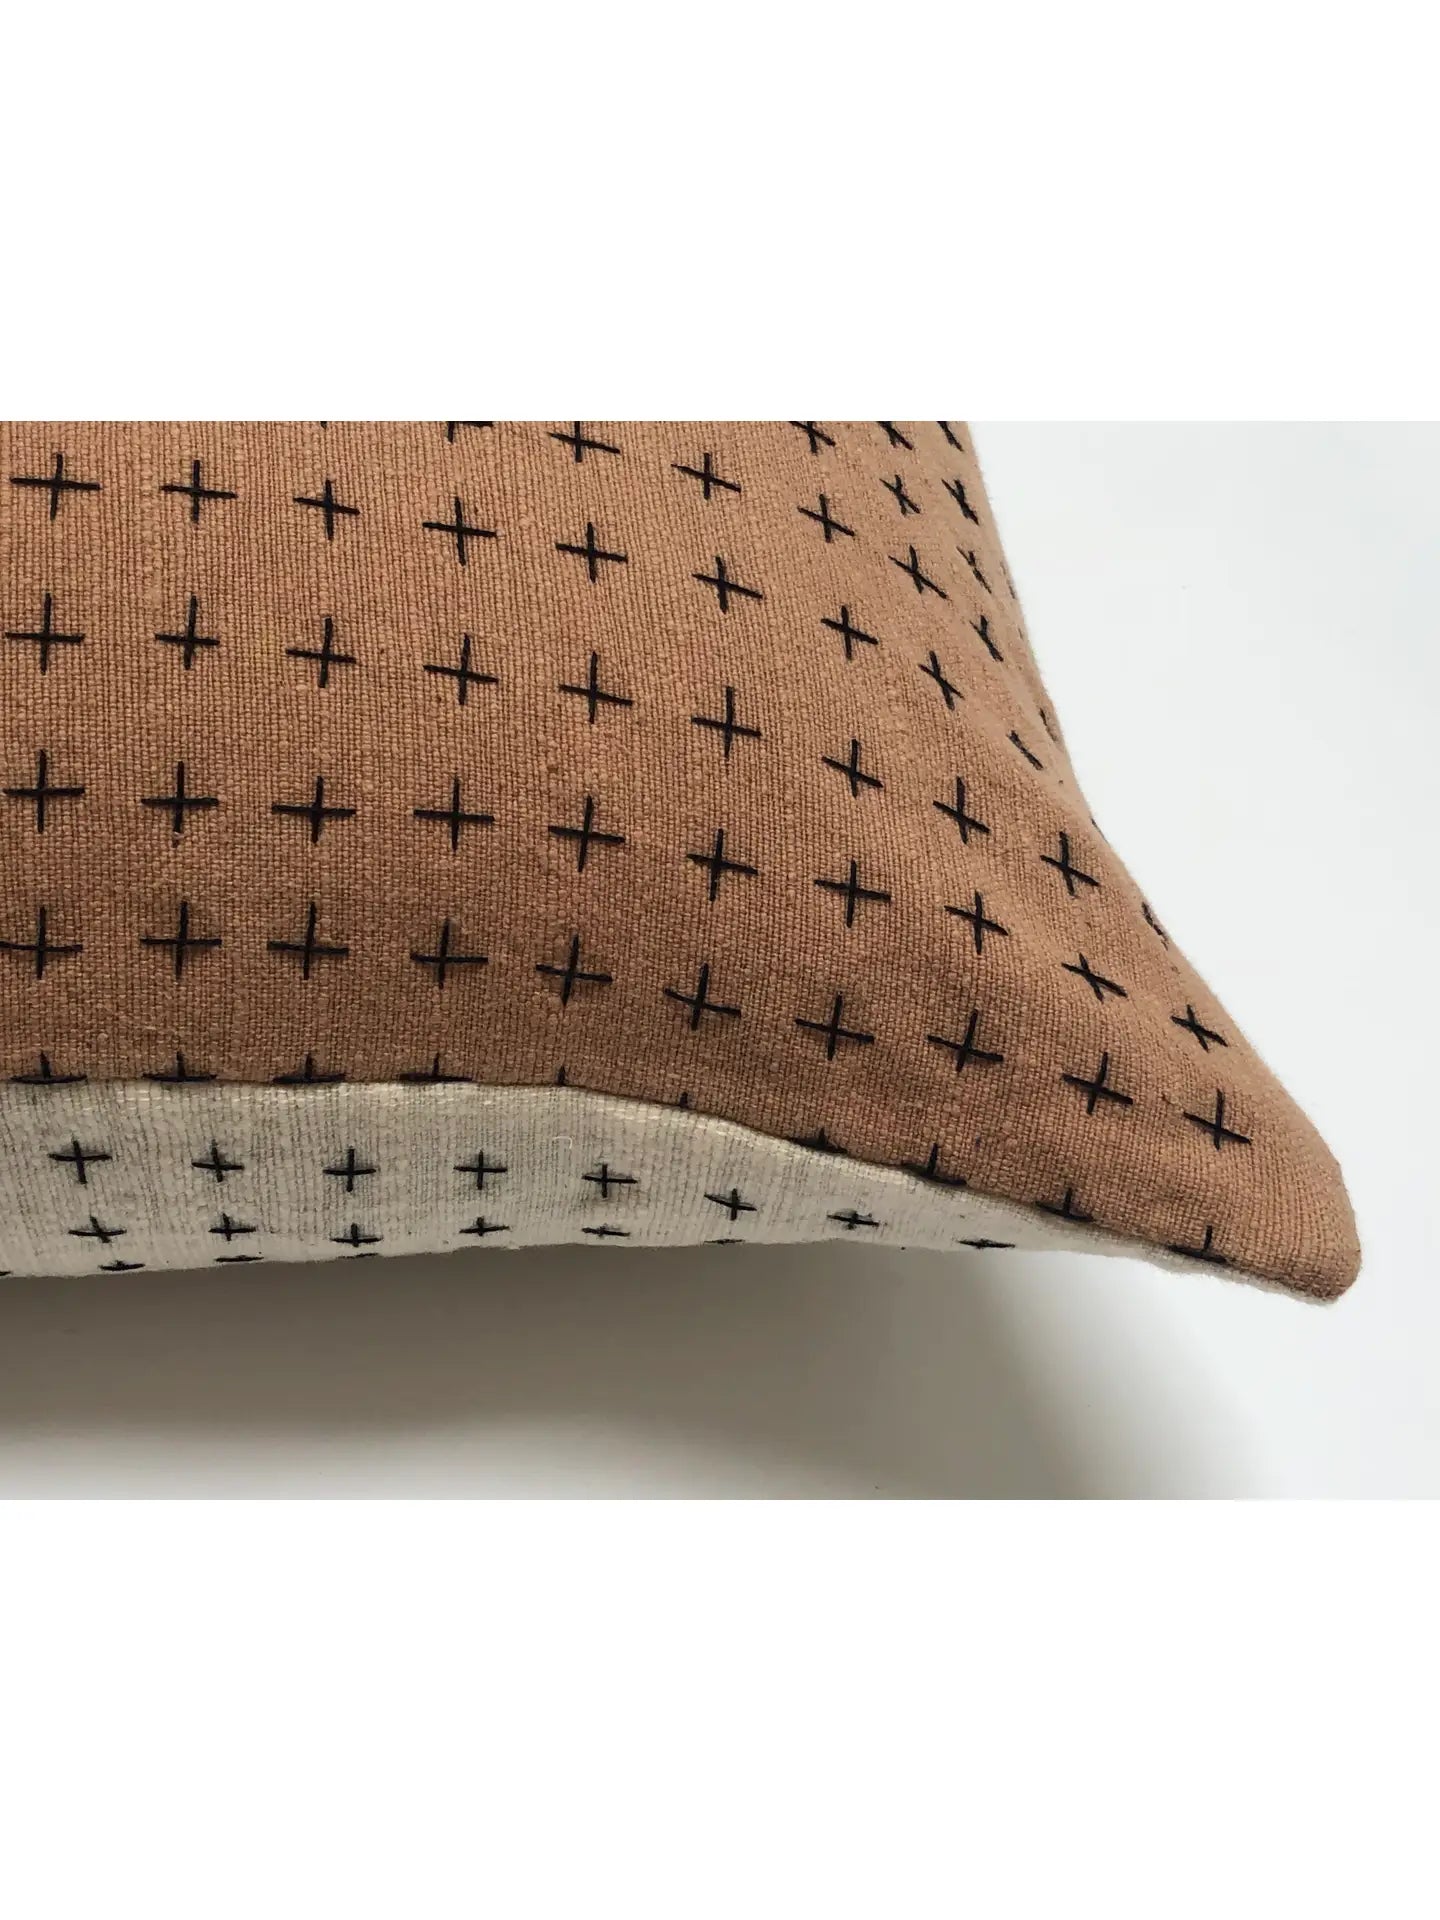 Hand-spun 18X18 pillow